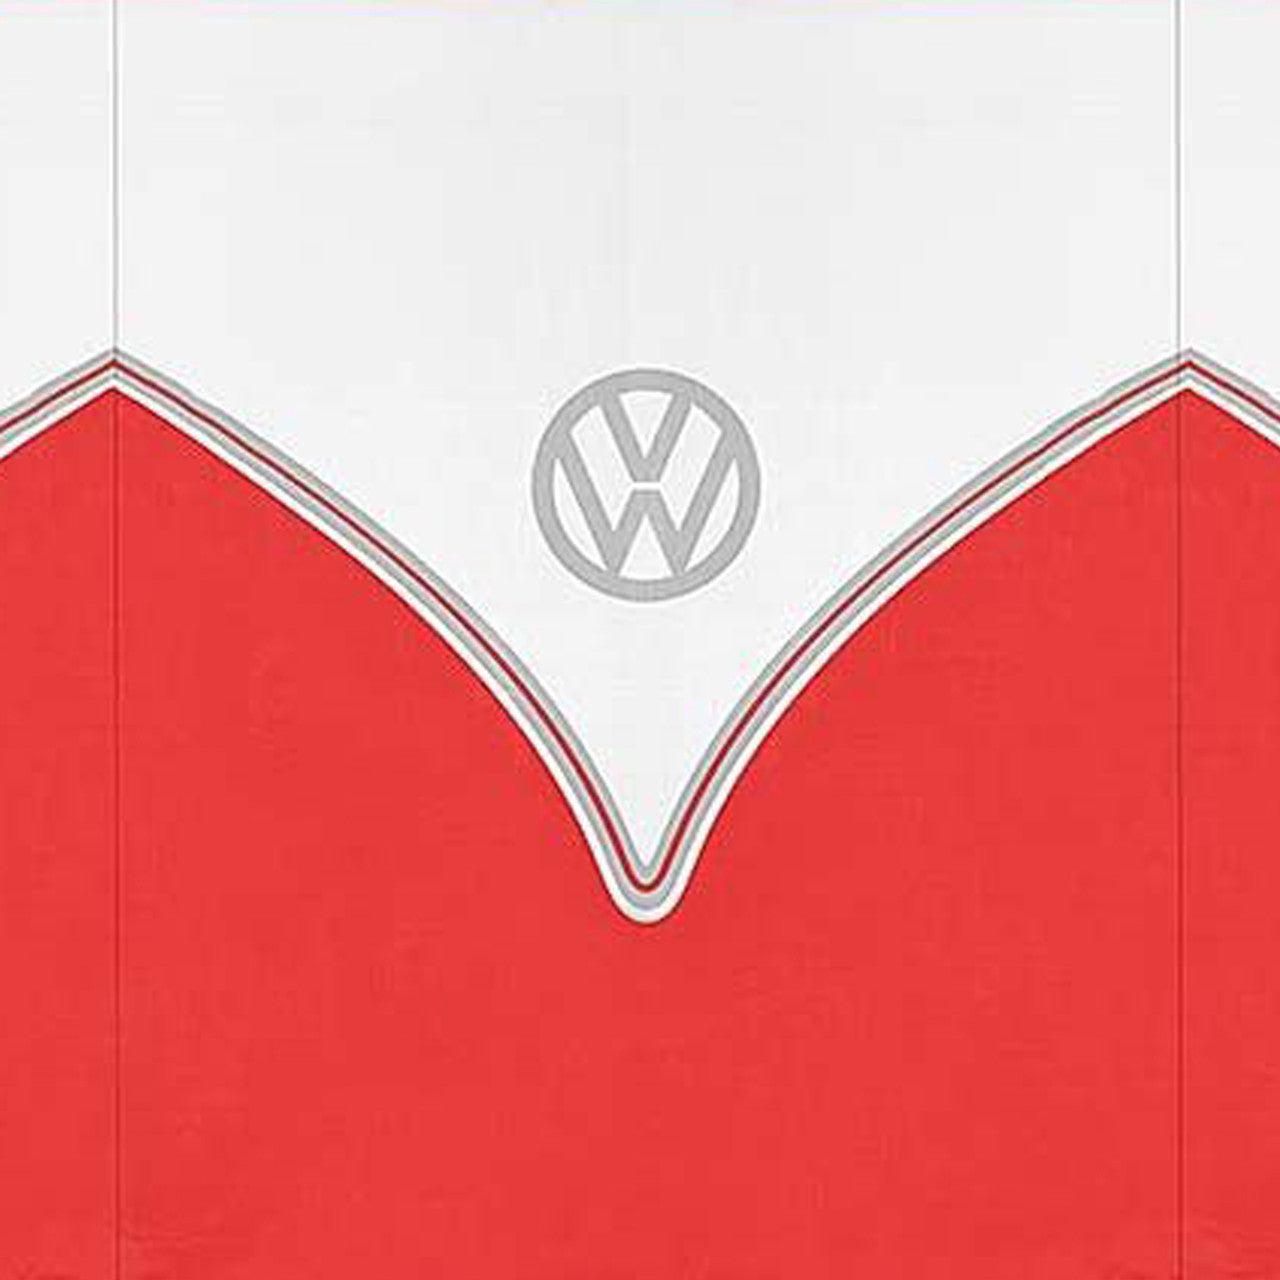 VW 5 POLE TALL WINDBREAK - RED-Windbreak-VW Merch-QQ107791R- DC Leisure